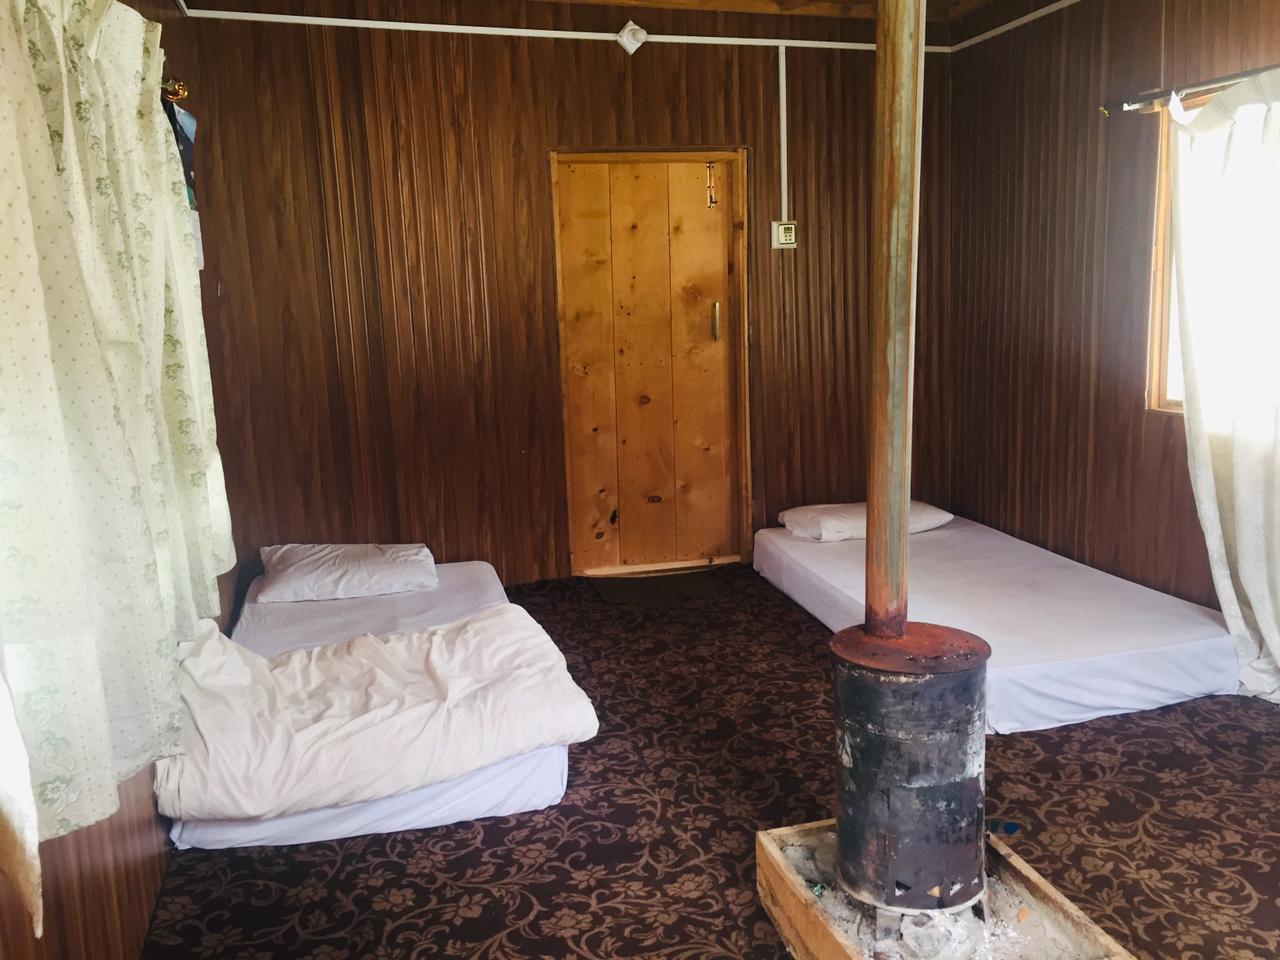 Hotel room in Arang Kel in Neelum Valley with view of the valley